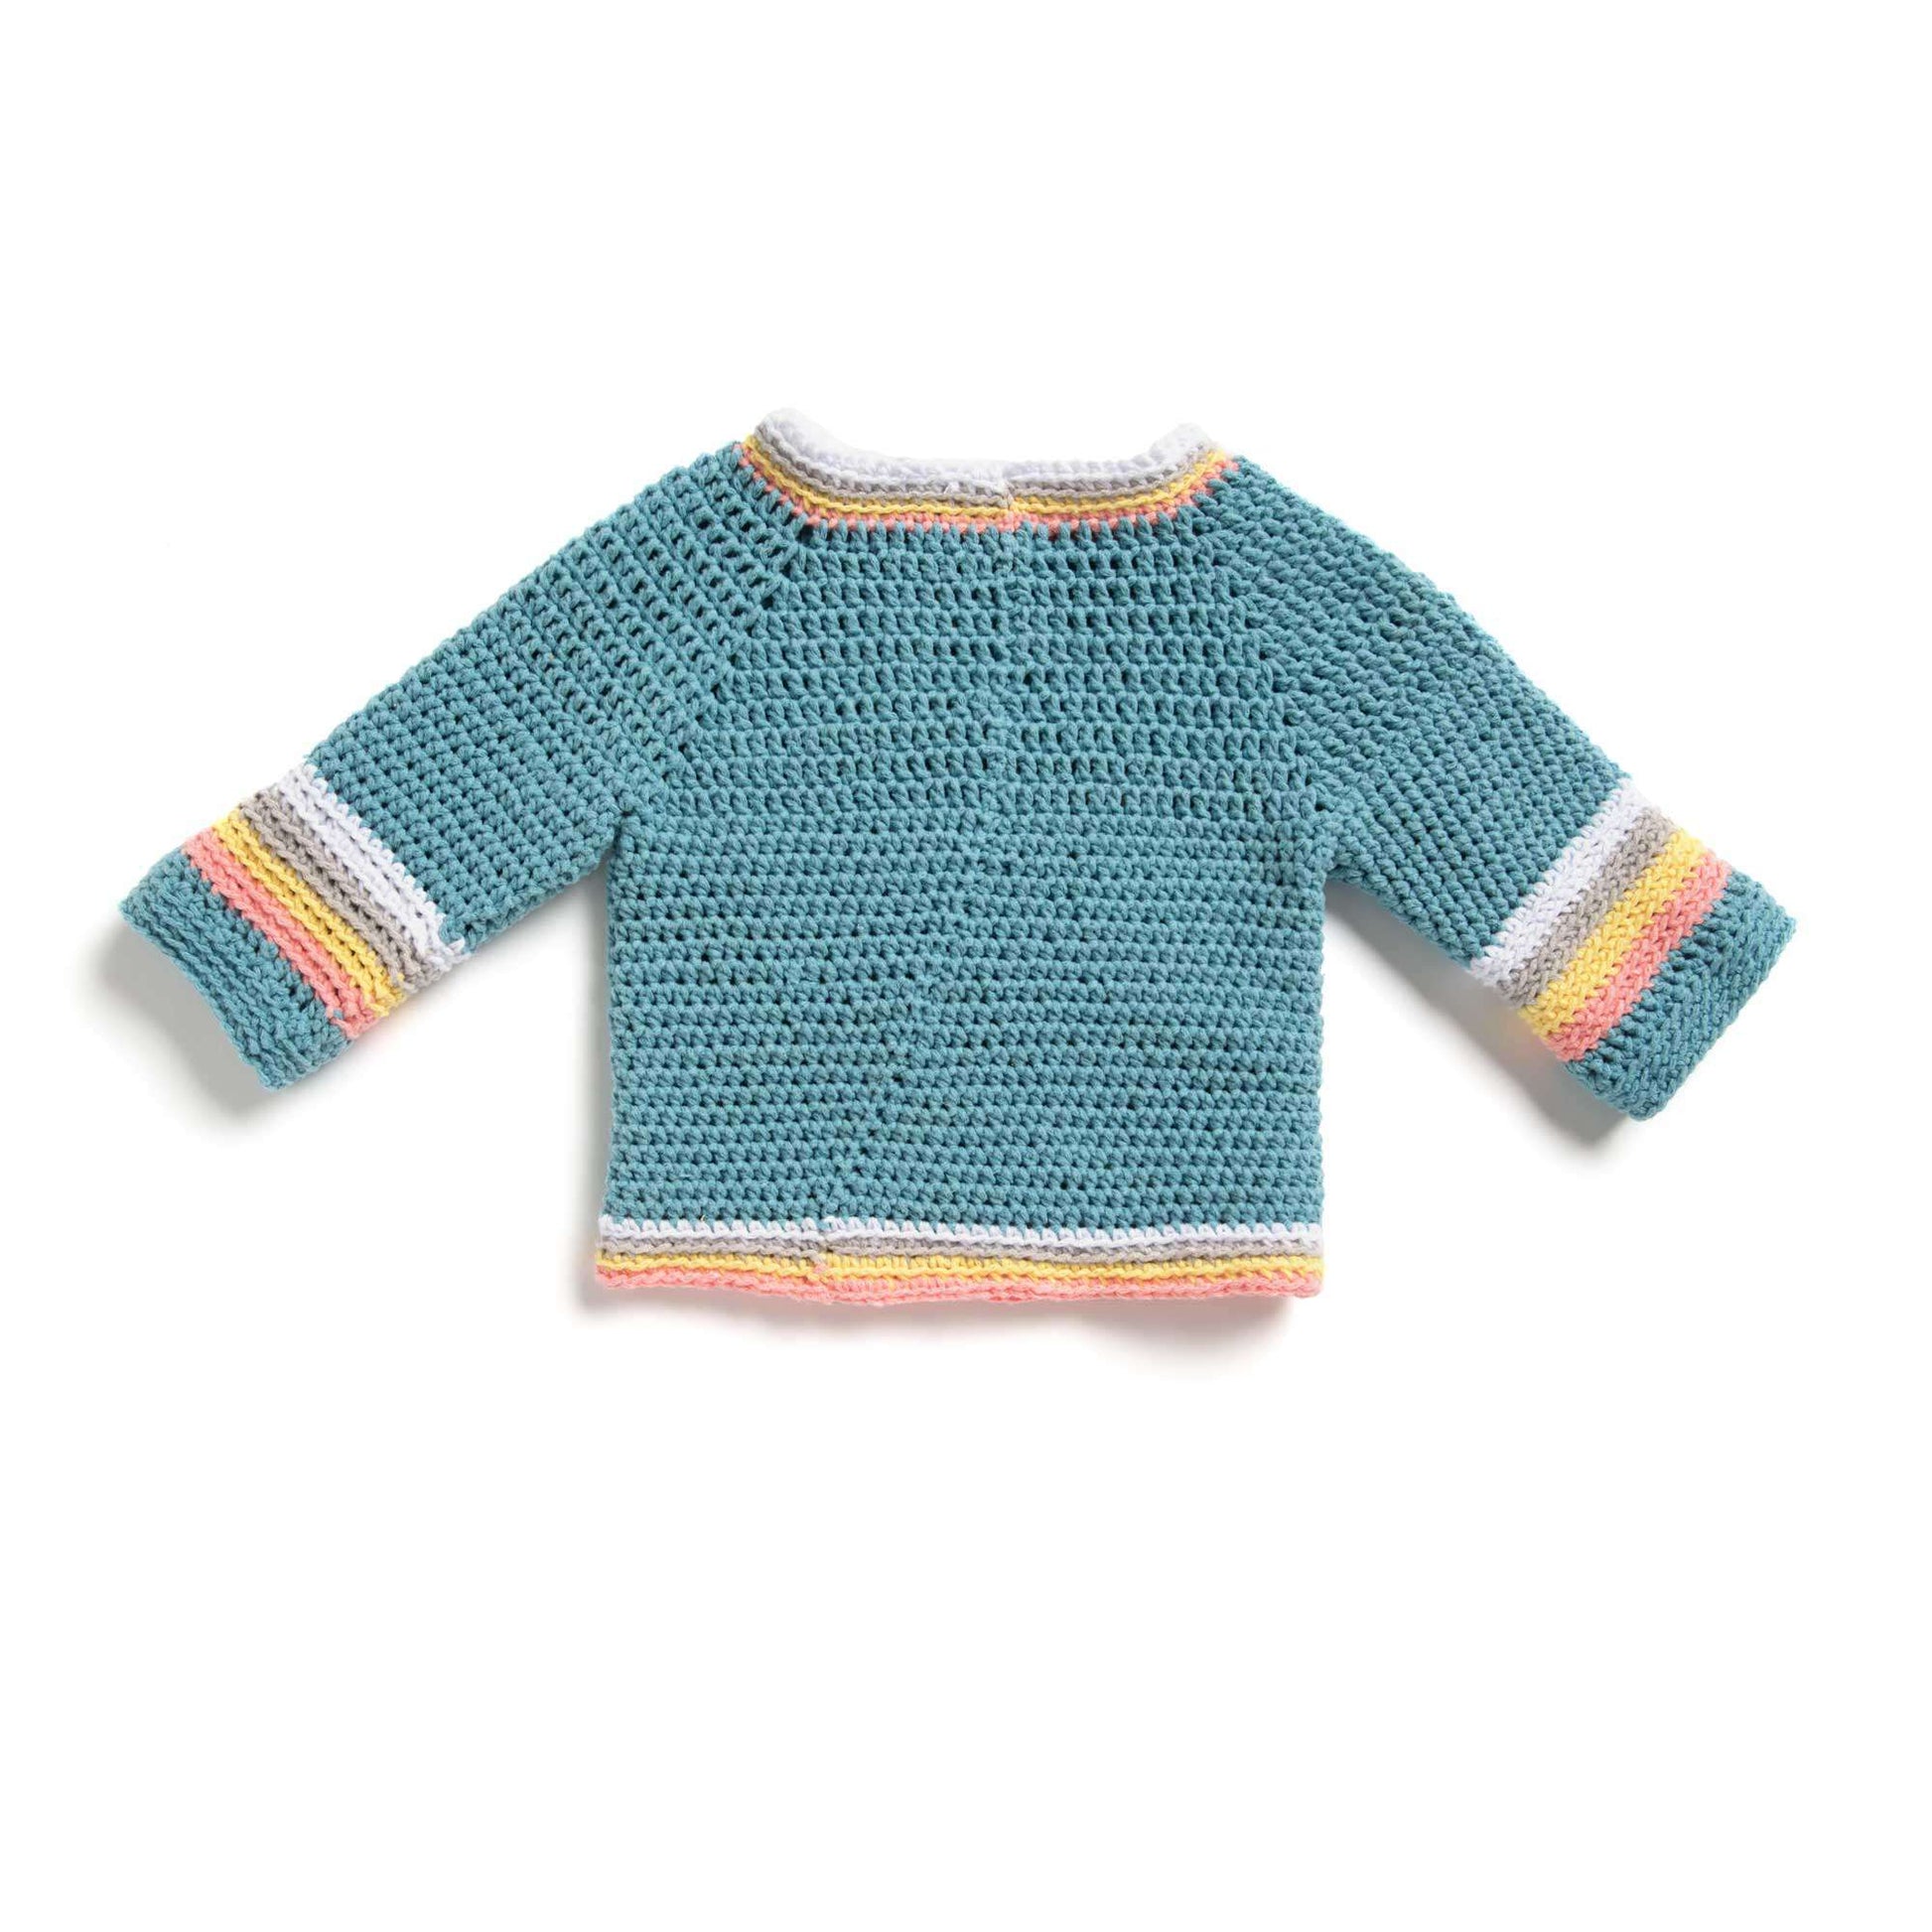 Bernat Pattern Book 1263 Kids Fun Knitted Sweater Designs Ages 2 through 12